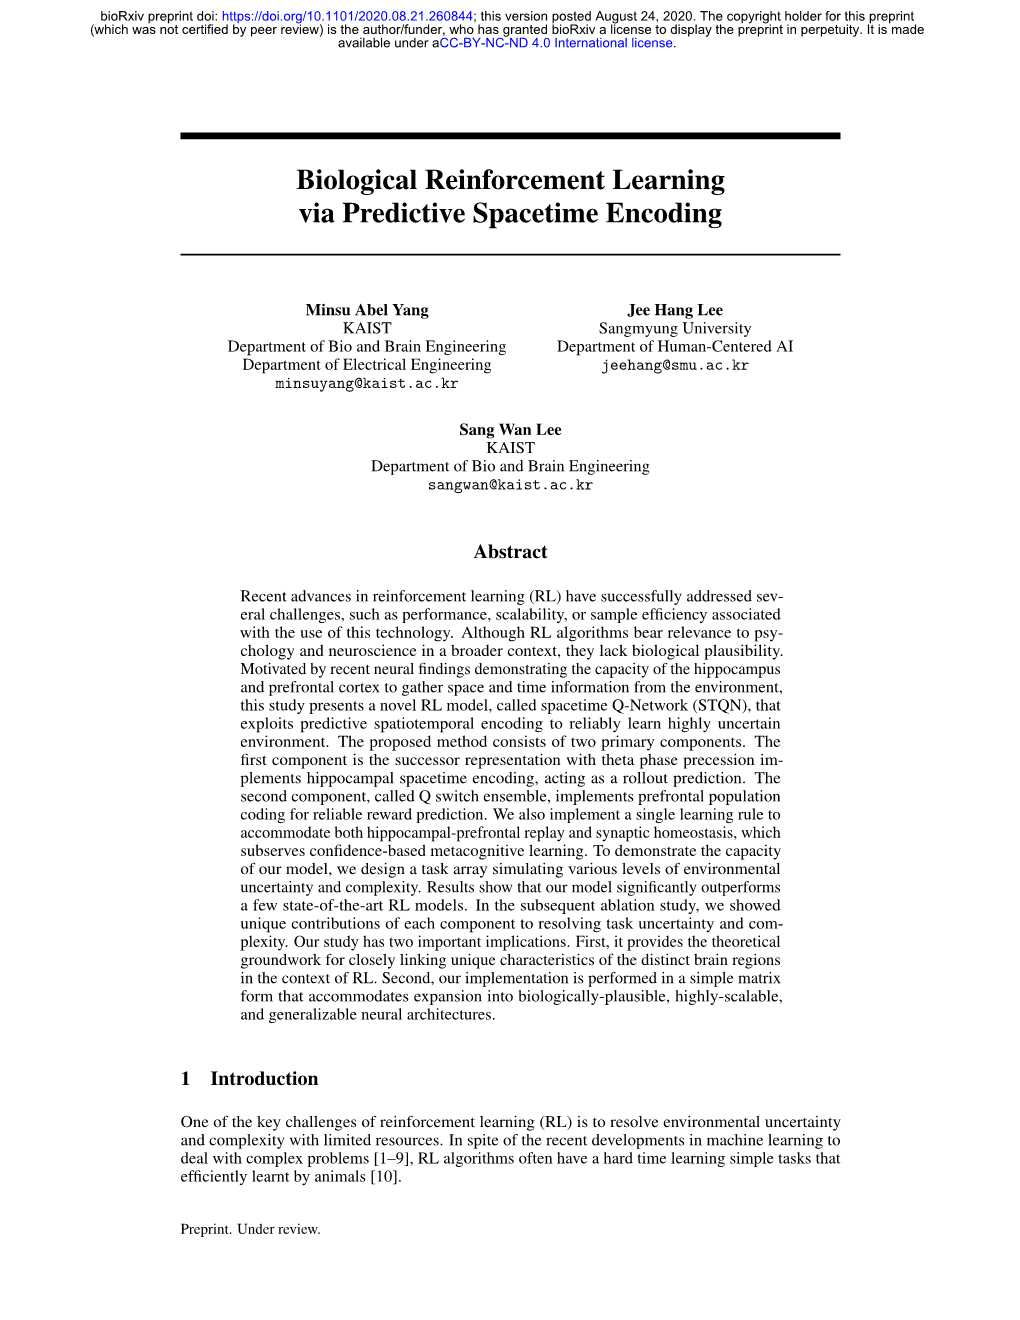 Biological Reinforcement Learning Via Predictive Spacetime Encoding